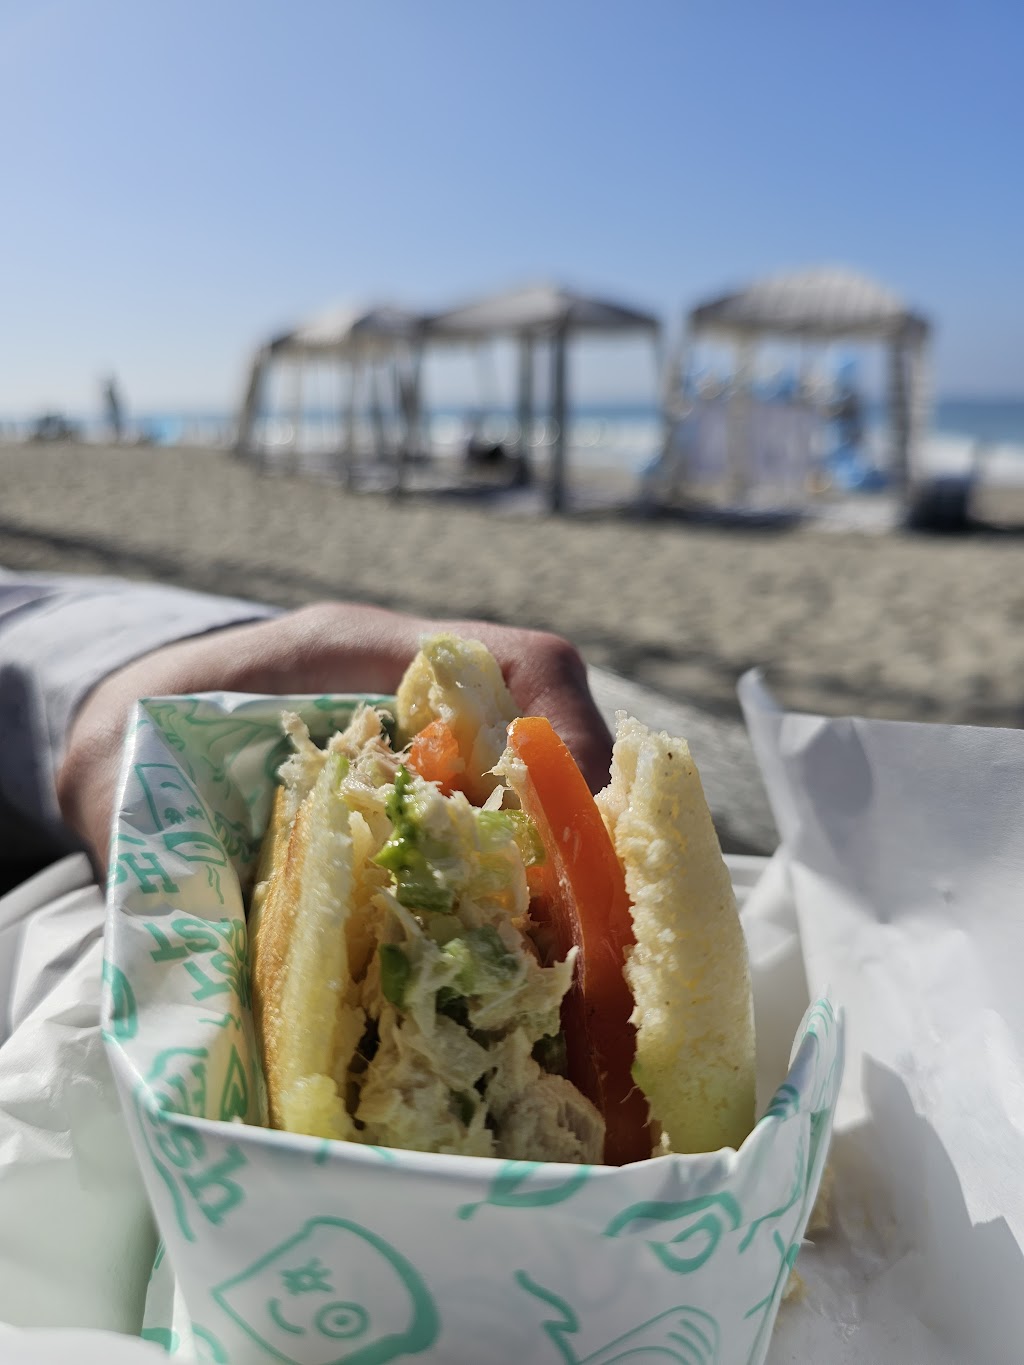 West Toast Cafe | San Clemente Pedestrian Beach Trail, 339 W Paseo De Cristobal, San Clemente, CA 92672, USA | Phone: (949) 779-5237